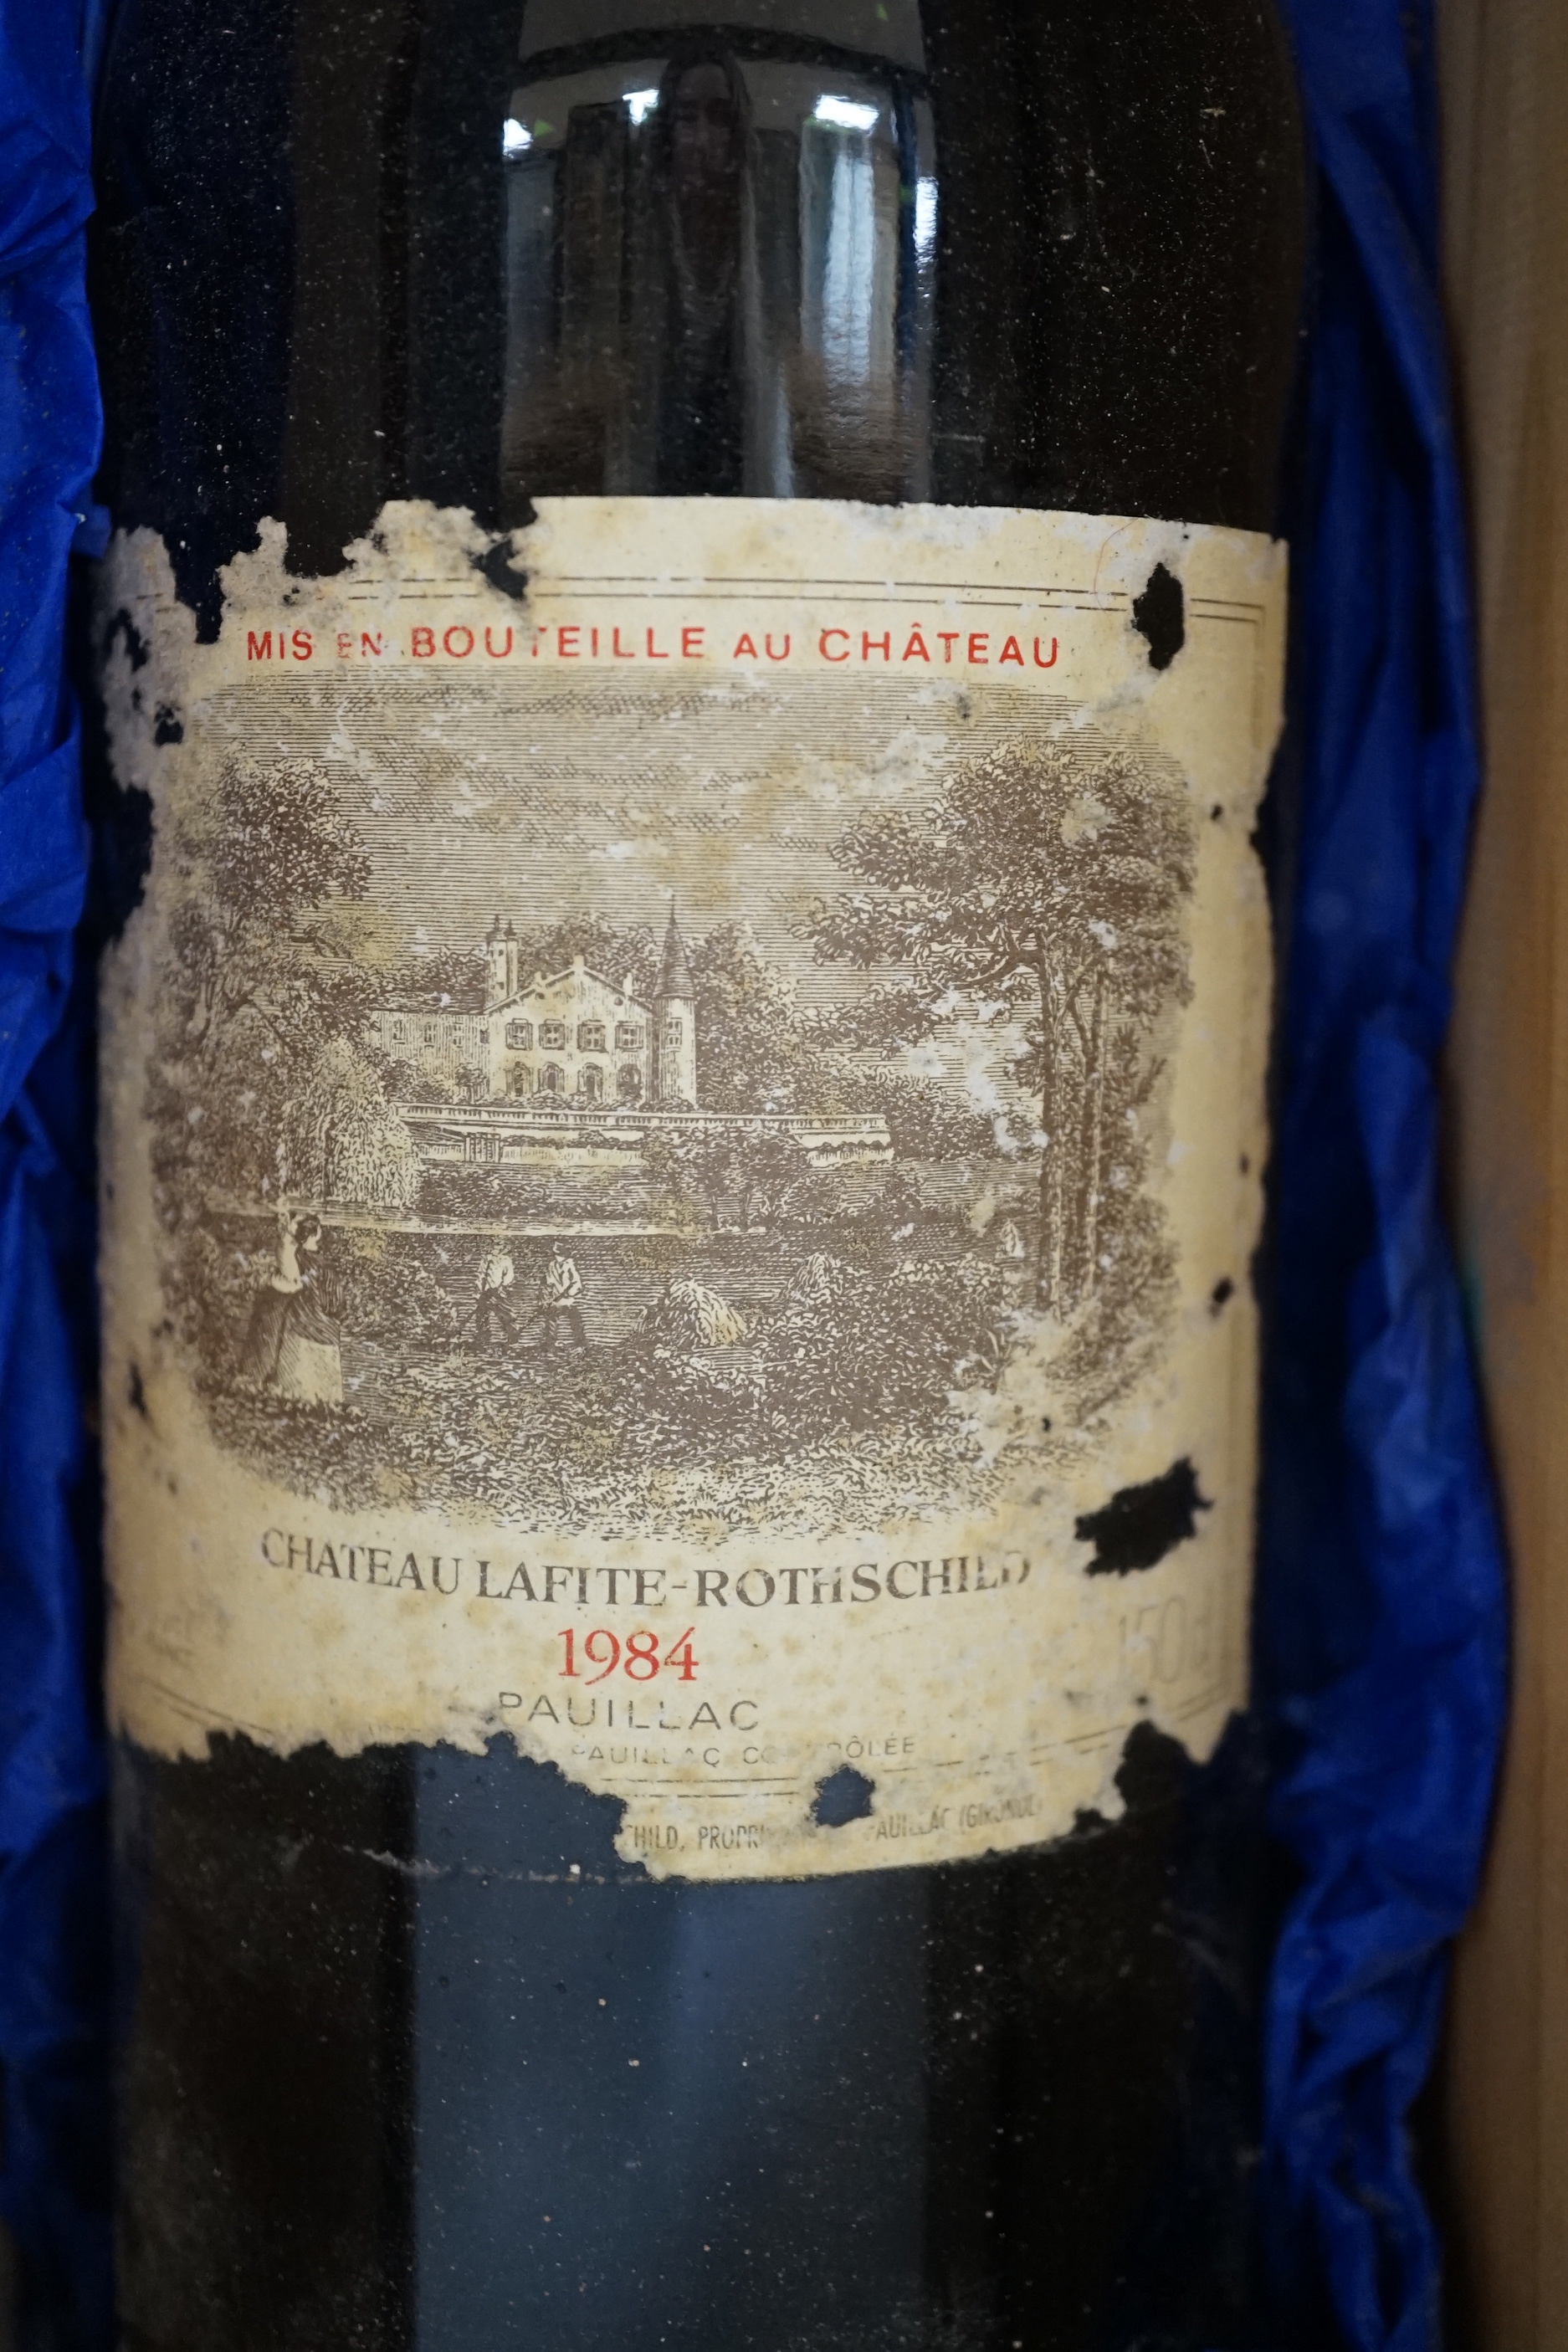 A cased magnum bottle of 1984 Chateau Lafite